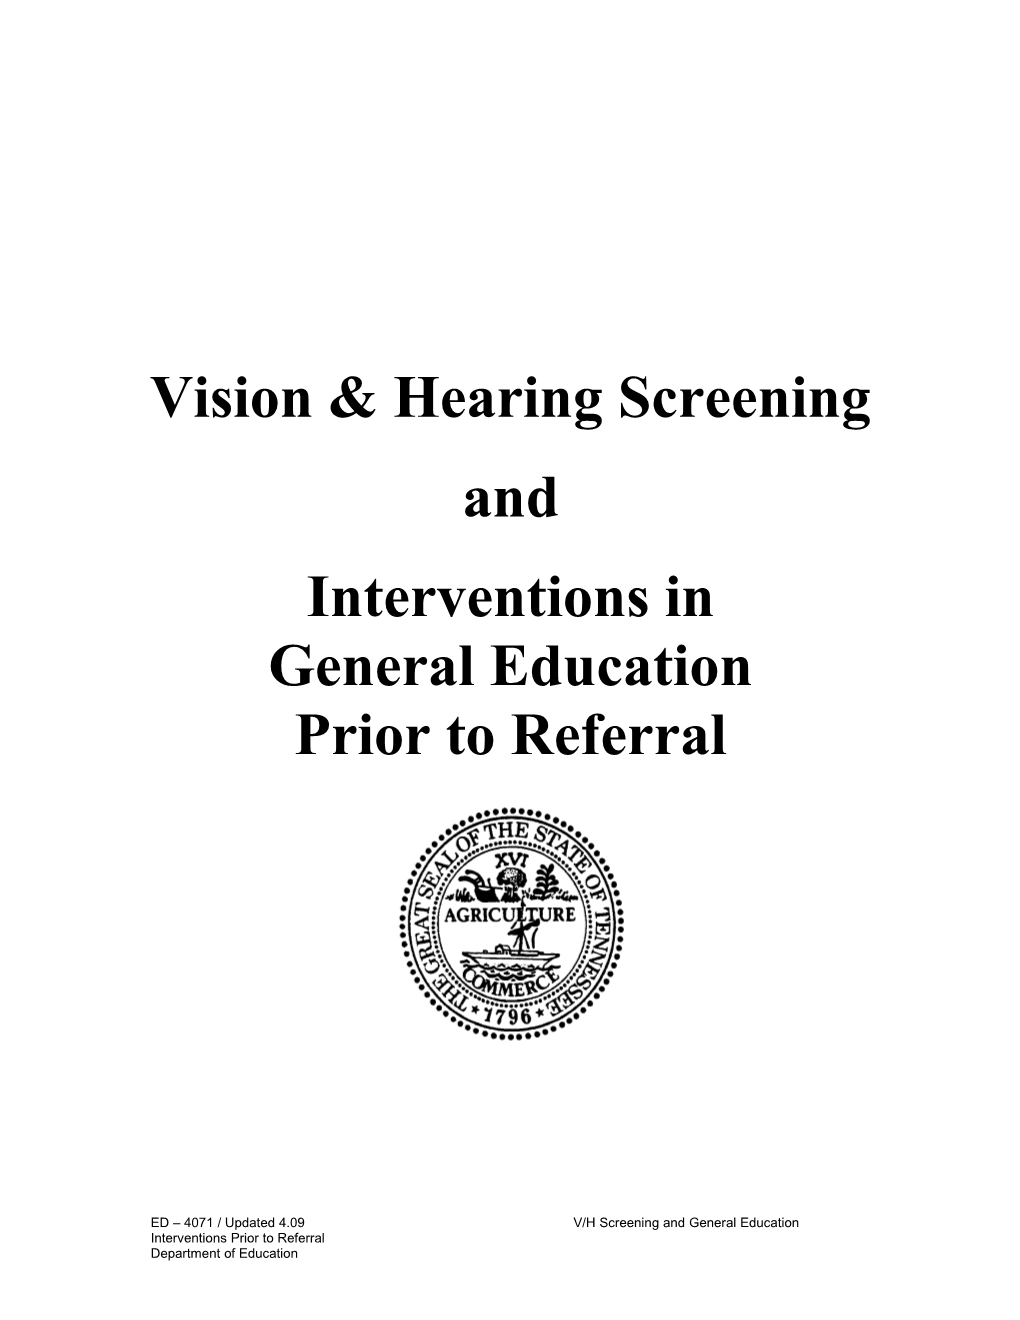 General Education Vision Screening Guidelines s1